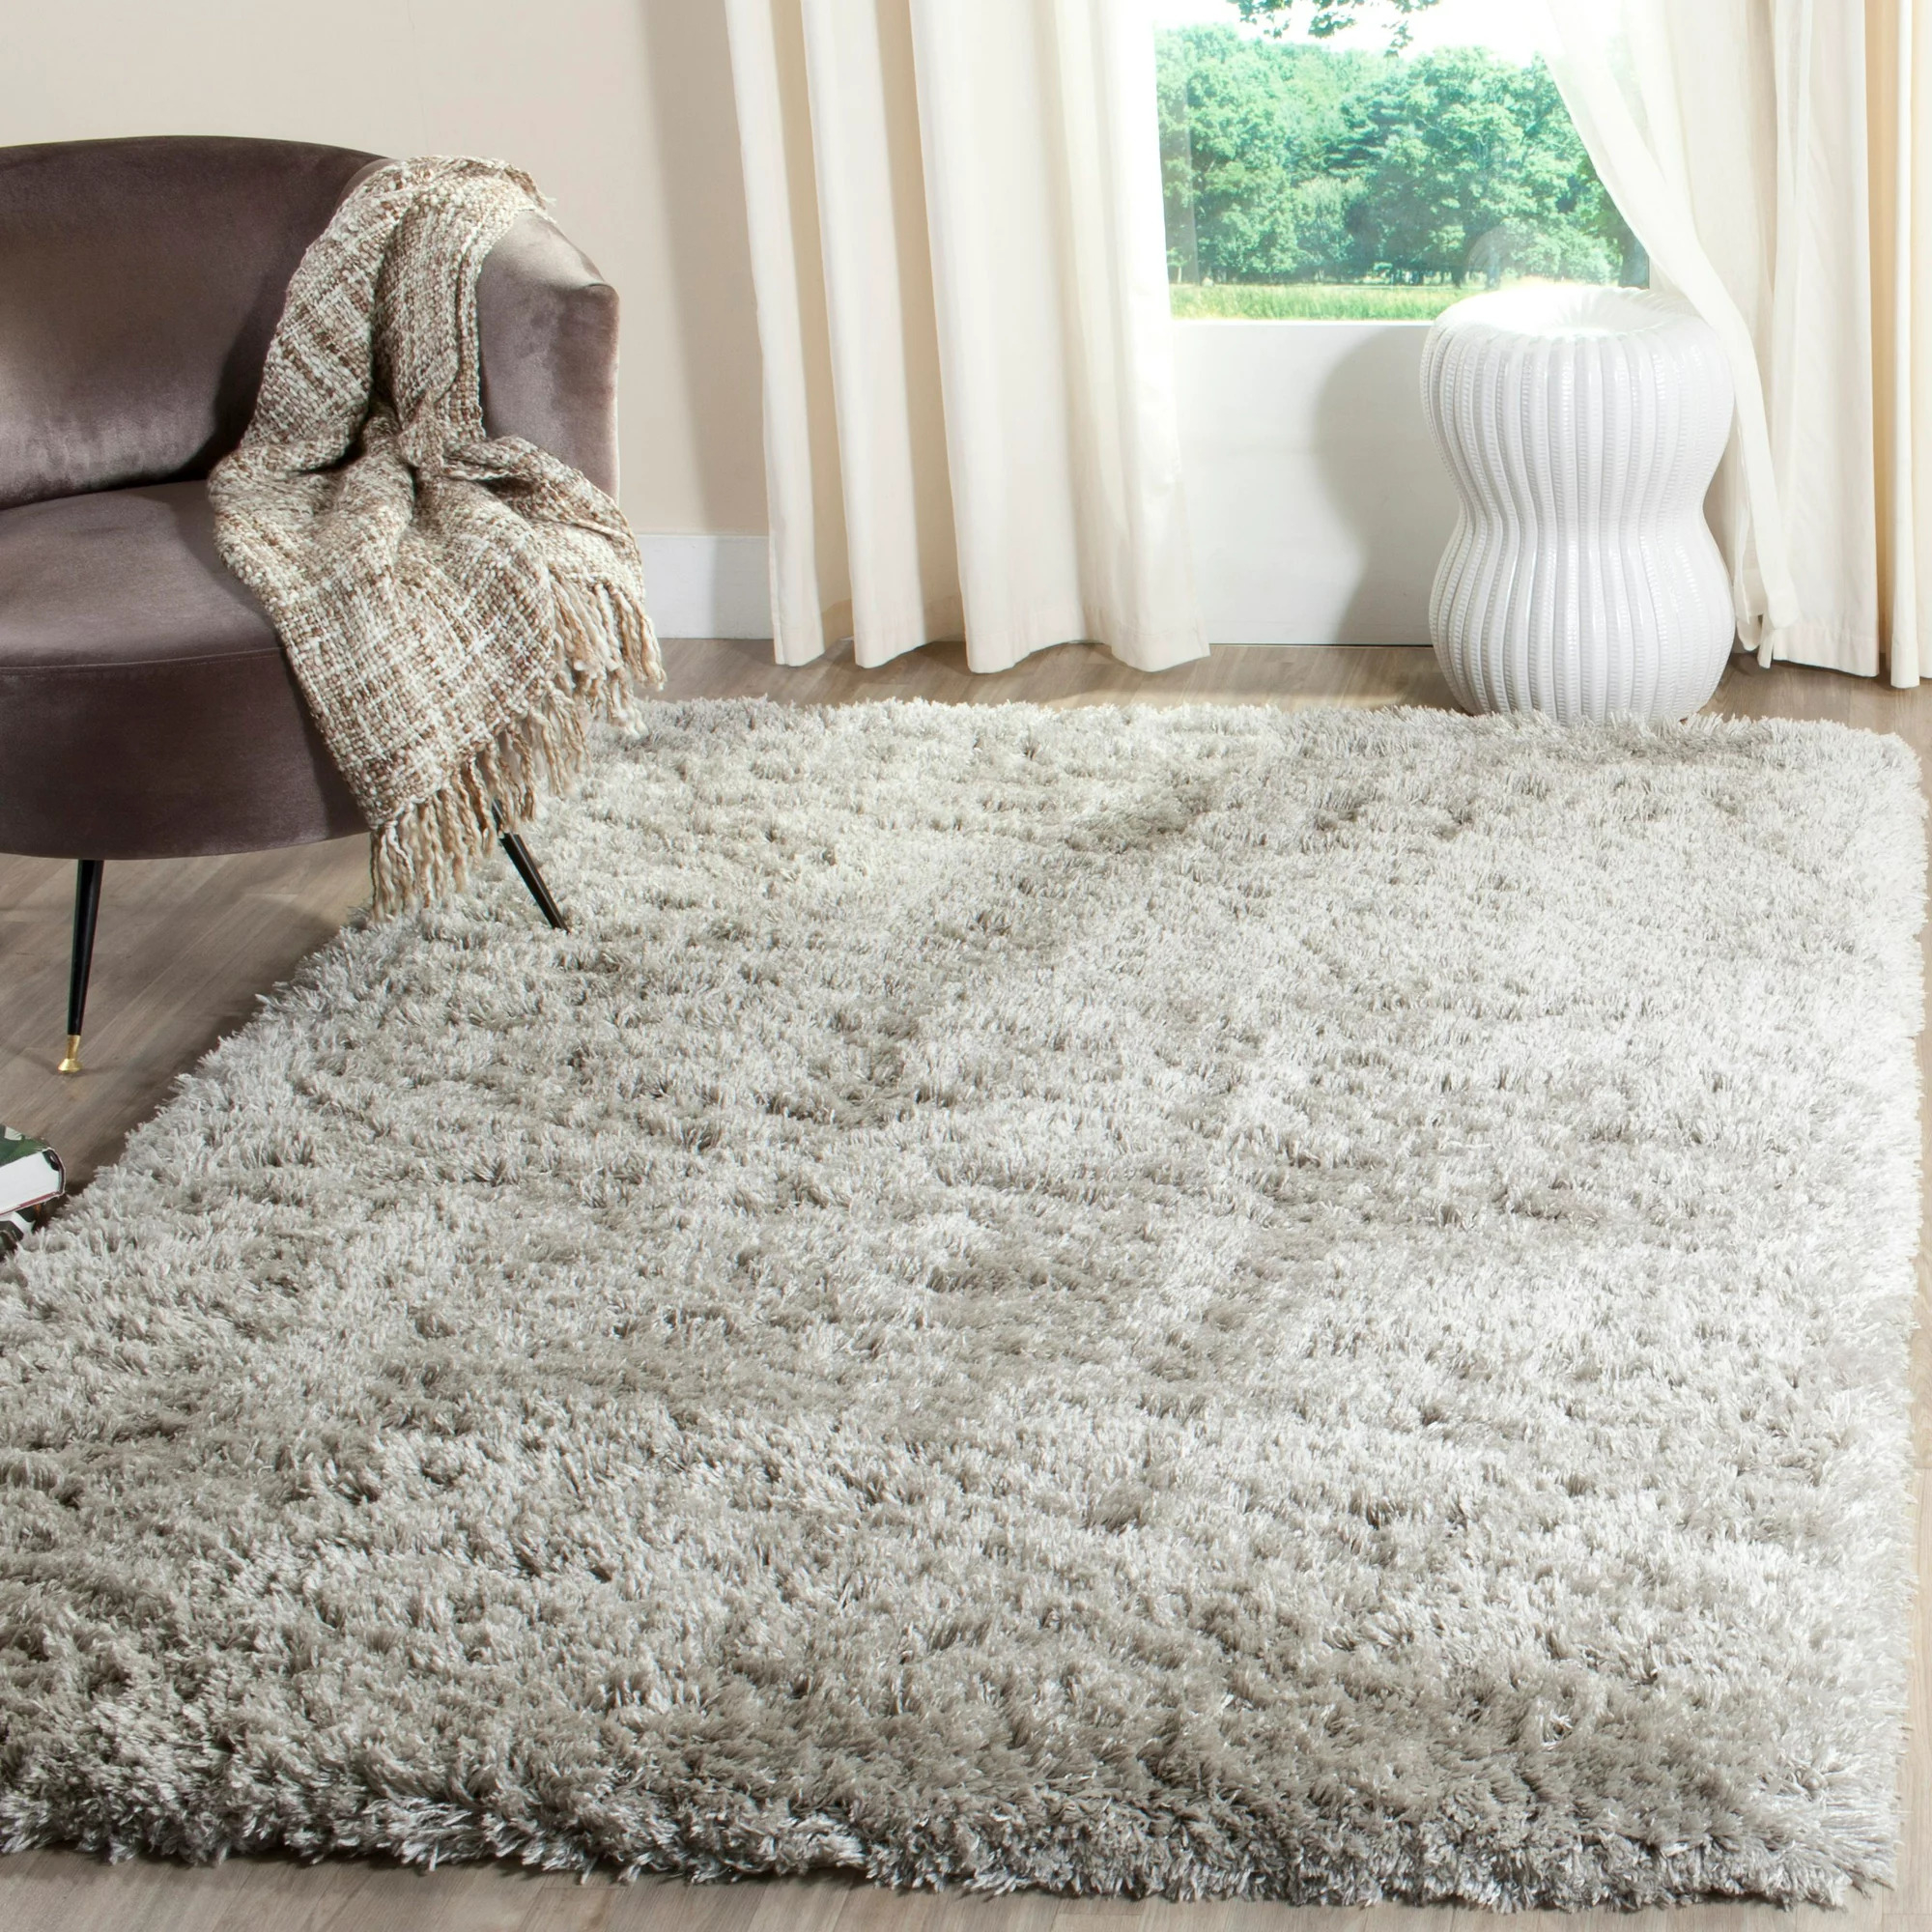 The white square area rug